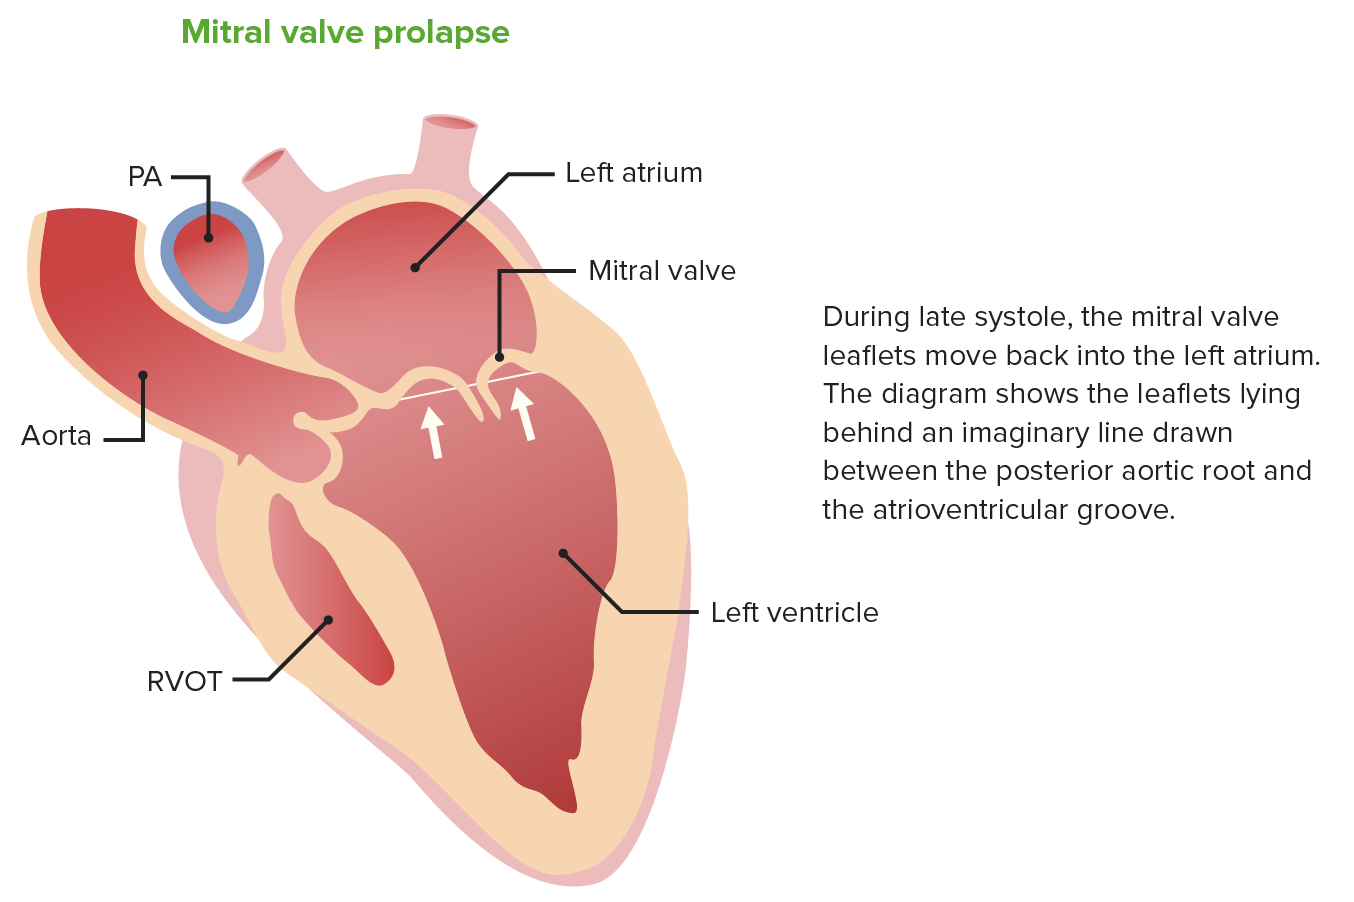 mitral valve prolapse adalah